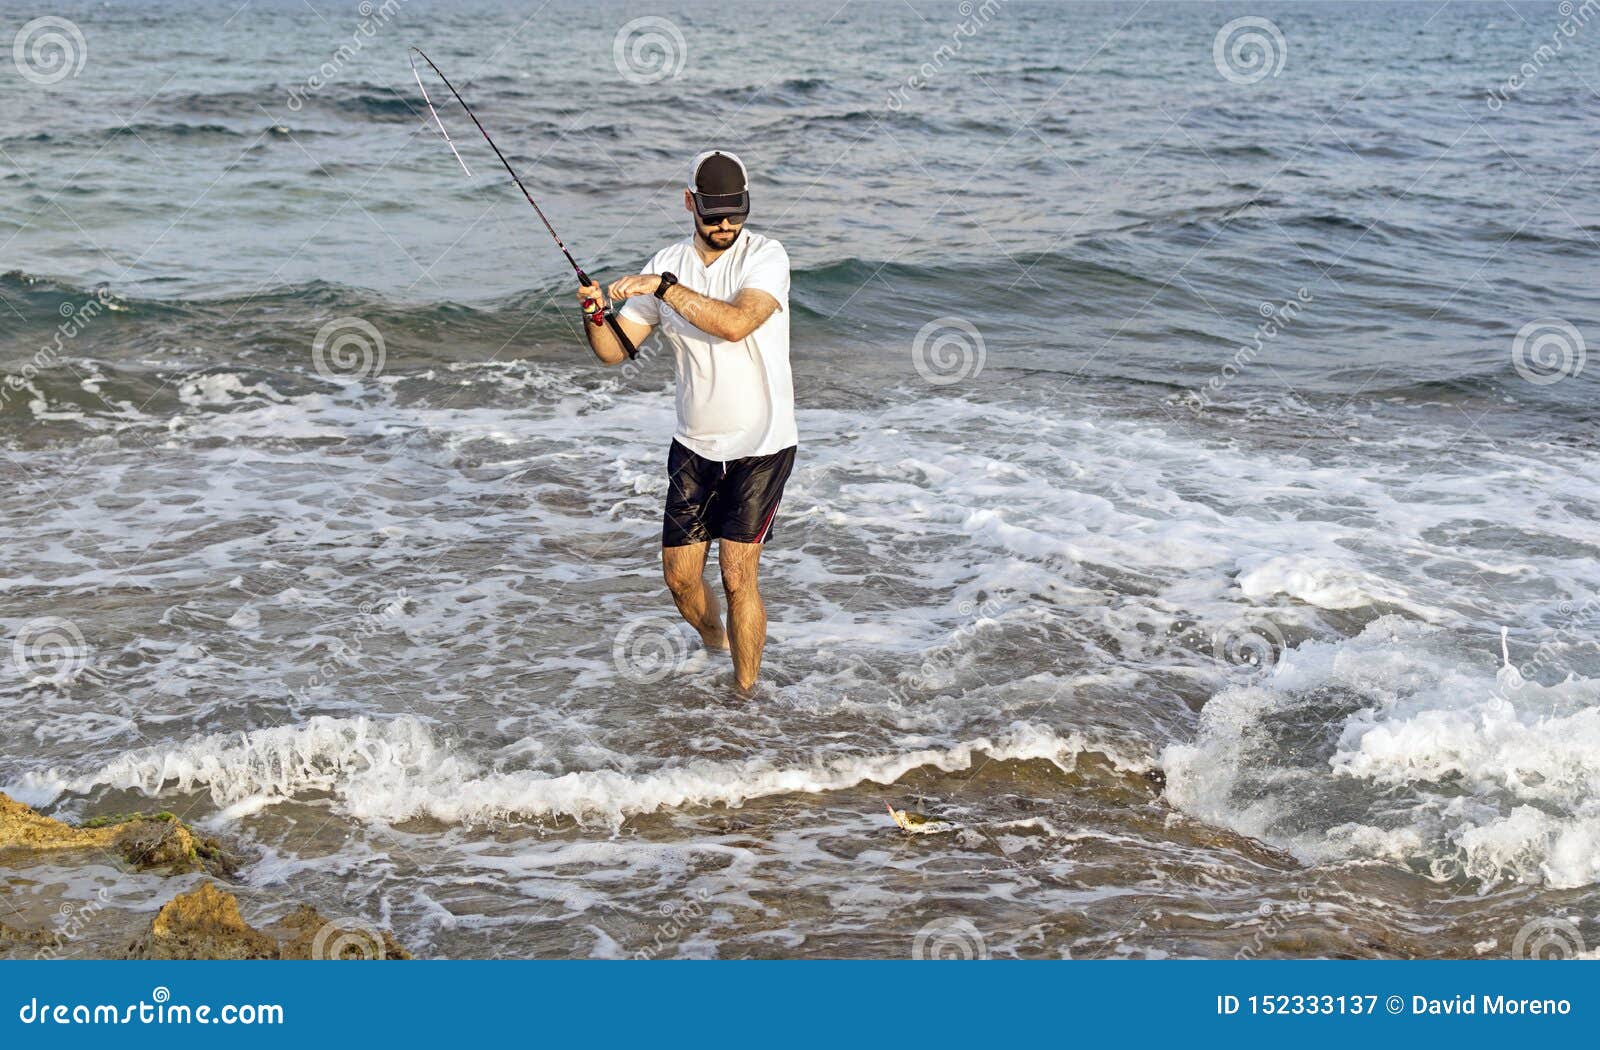 https://thumbs.dreamstime.com/z/fisherman-standing-seashore-hooks-fish-rock-fishing-stickbait-152333137.jpg